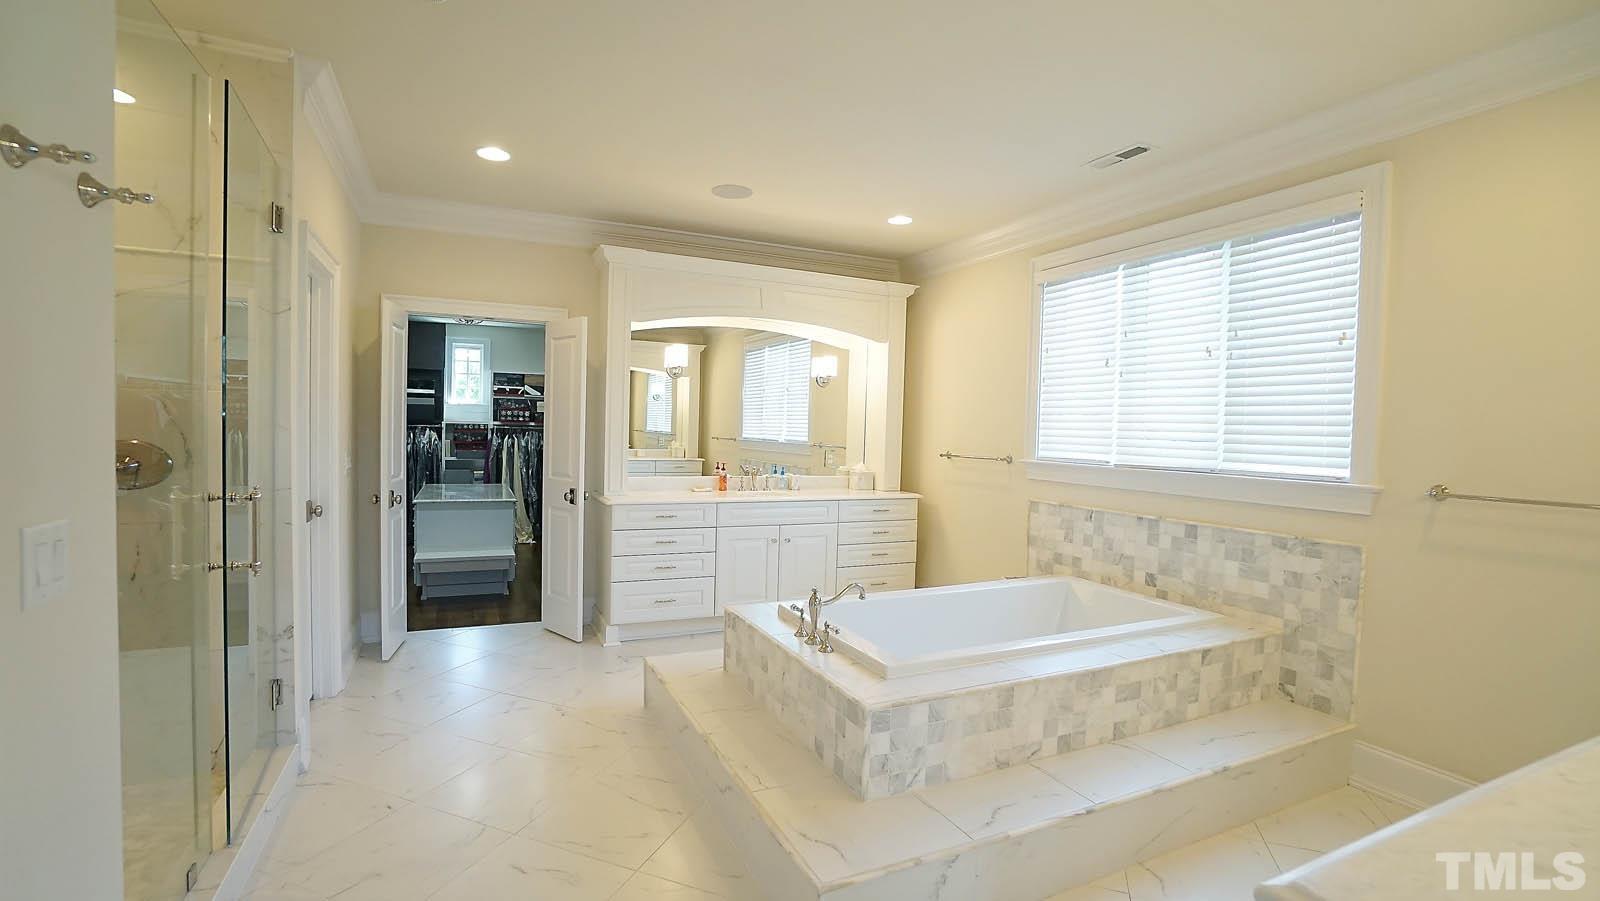 Dual vanities, tiled walk-in-shower and drop tub.